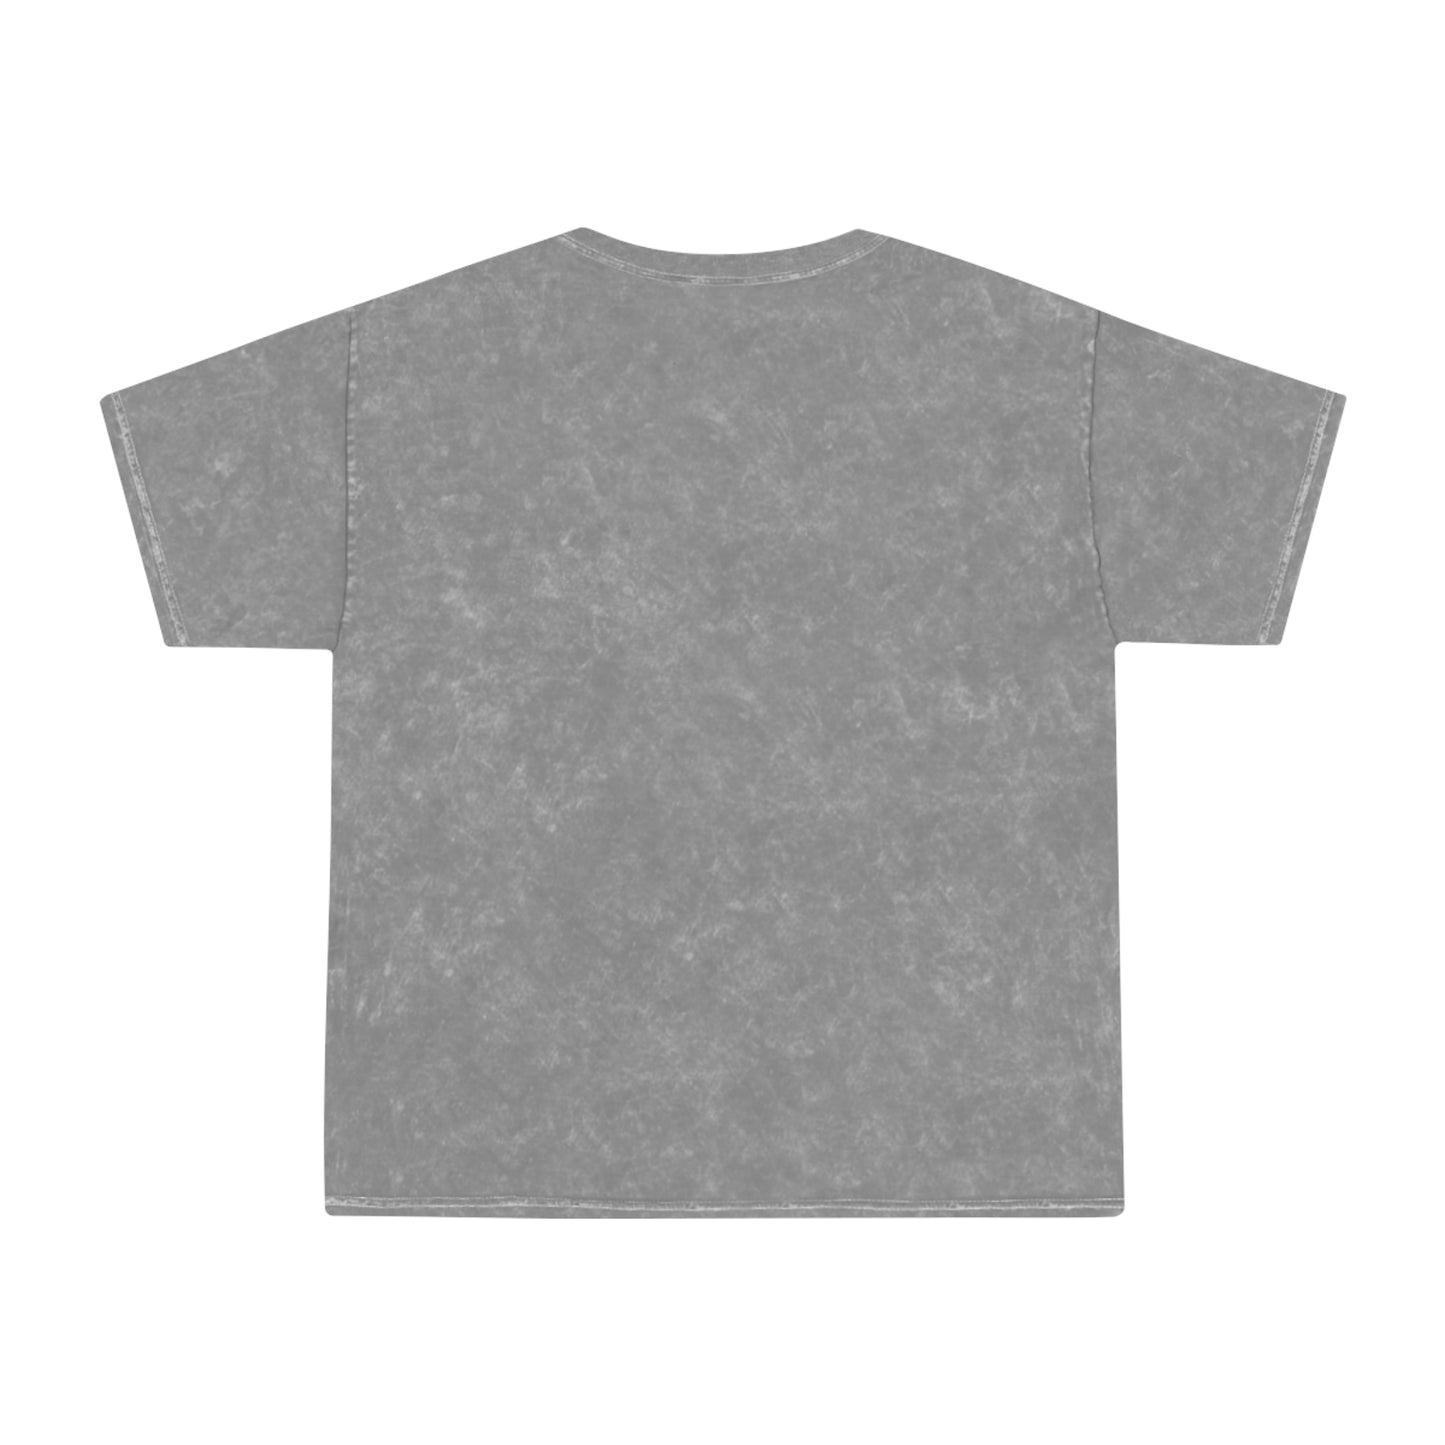 Journey Podcast - Unisex Mineral Wash T-Shirt